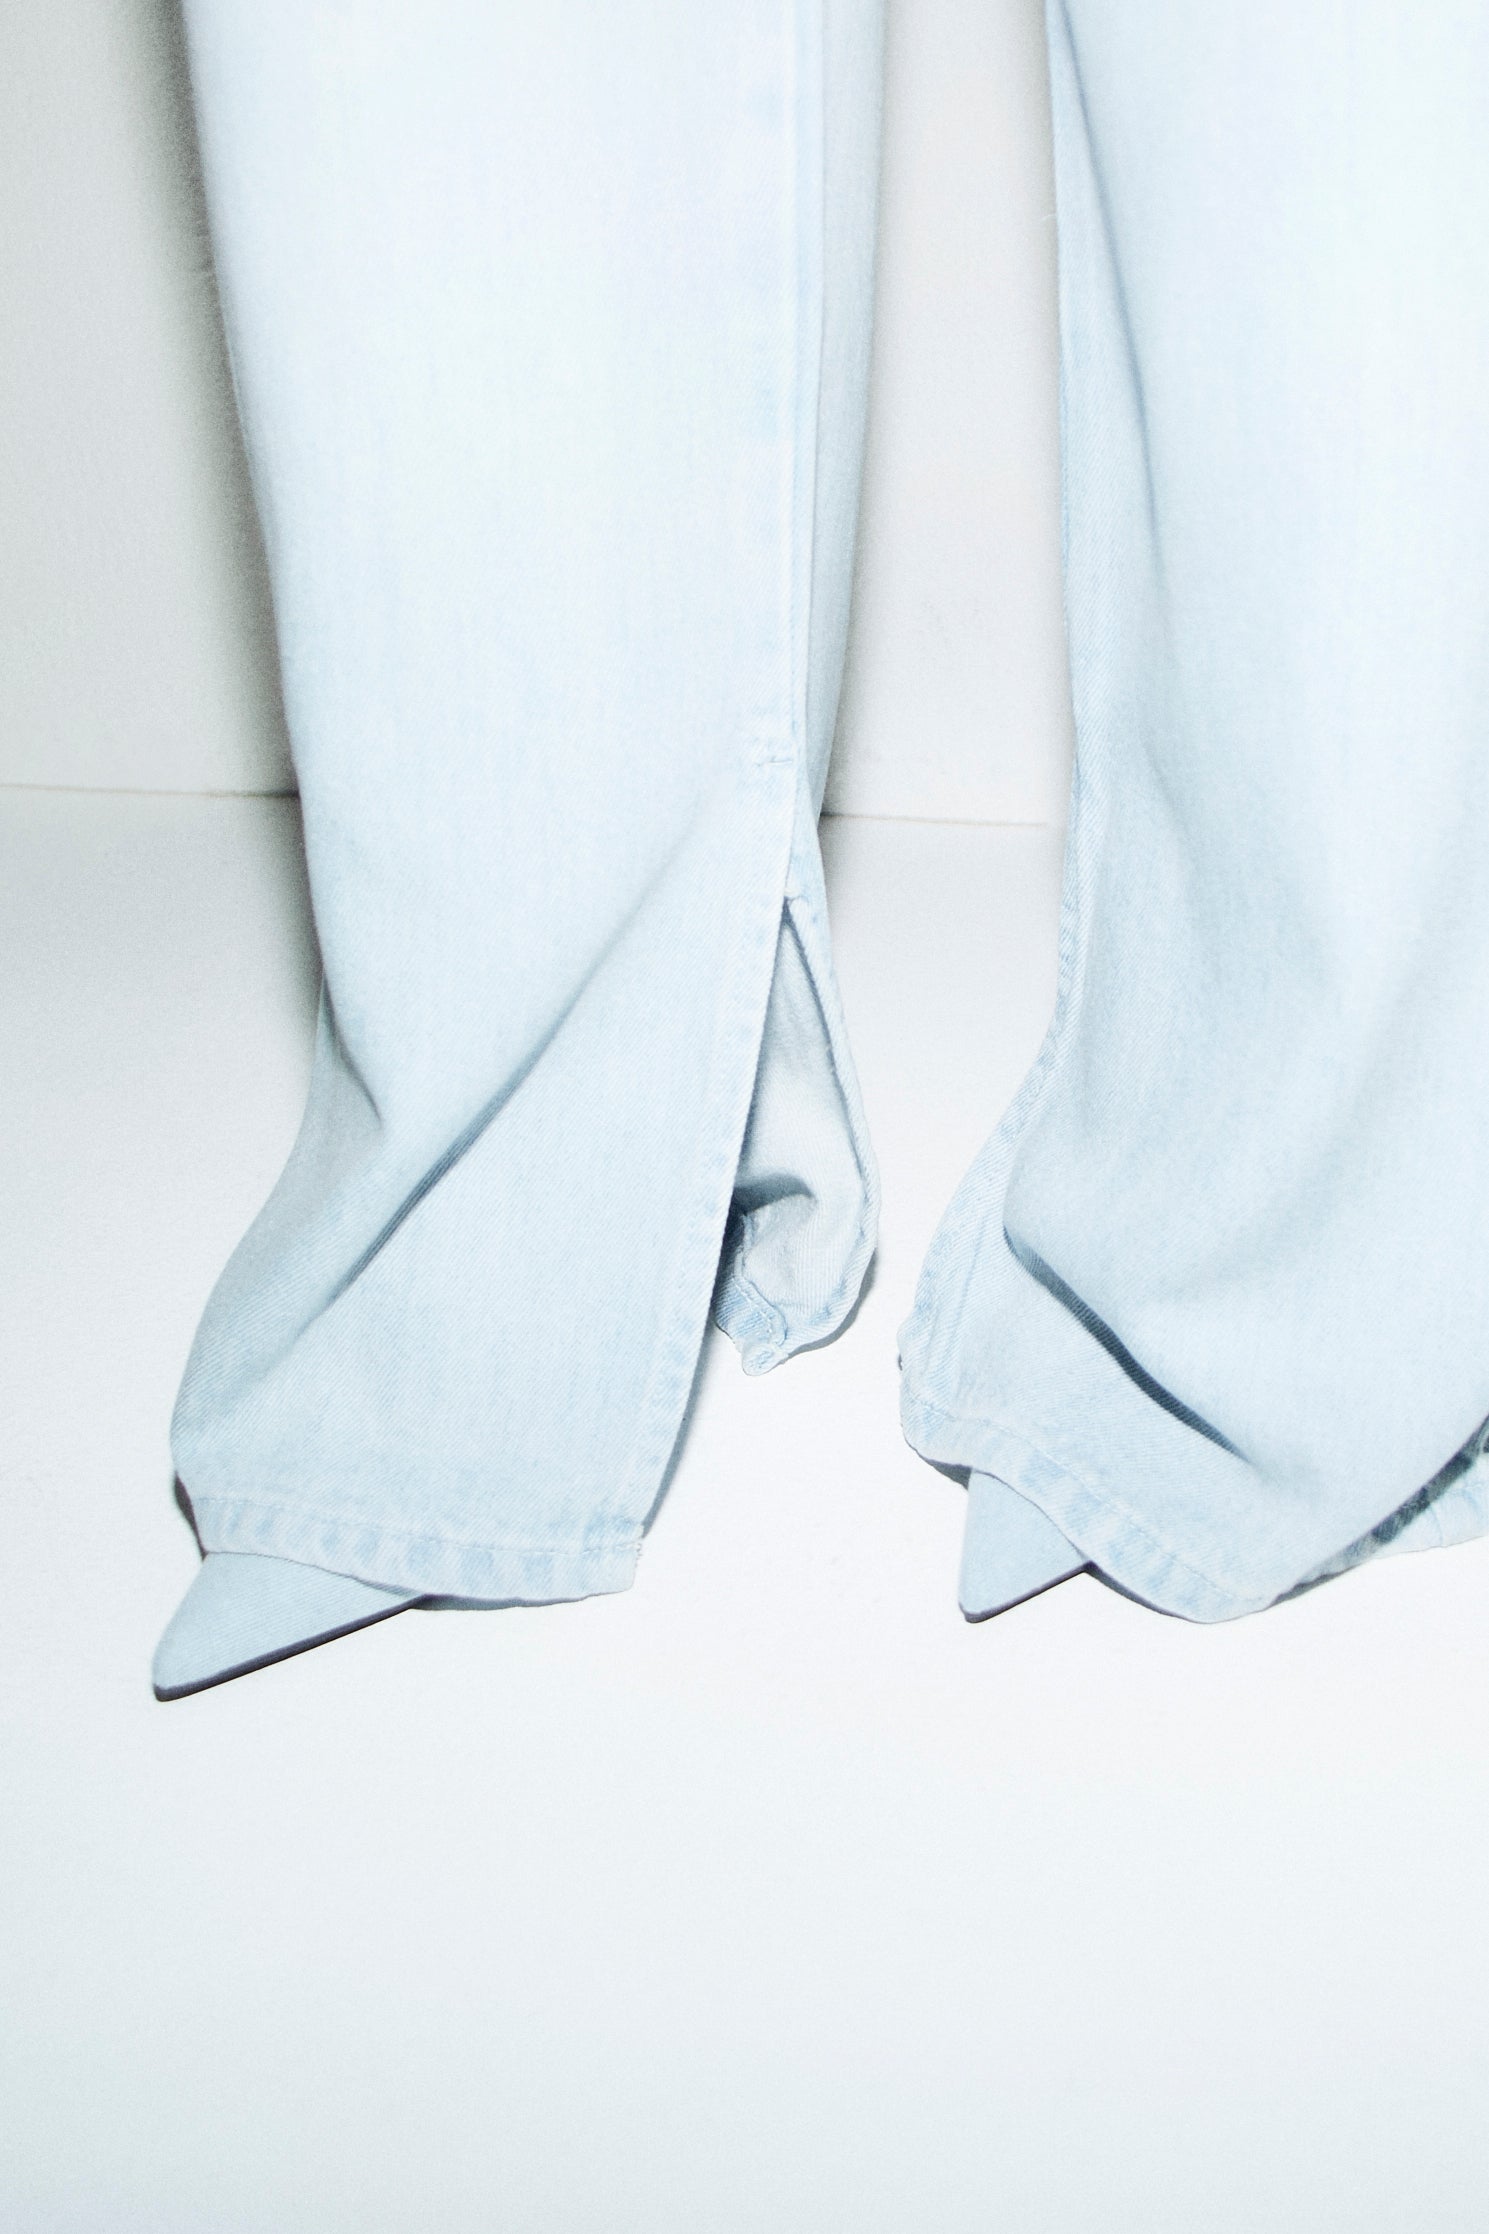 Homage to Denim Farrah Flowy Wide Leg Jeans With Slits - Light Blue Wash - RUM Amsterdam